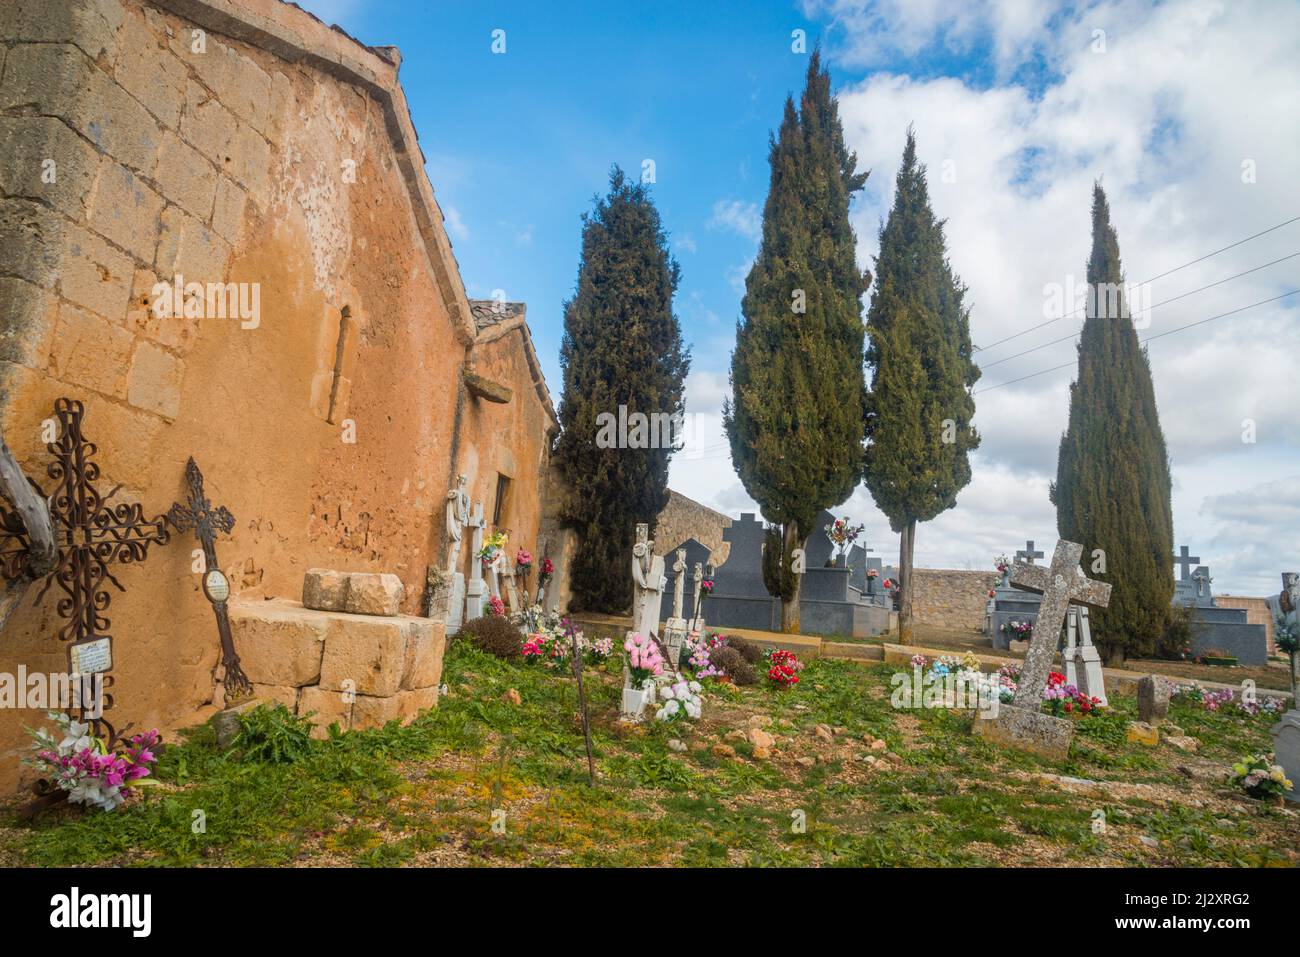 Graveyard. Fresno de la Fuente, Segovia province, Castilla Leon, Spain. Stock Photo